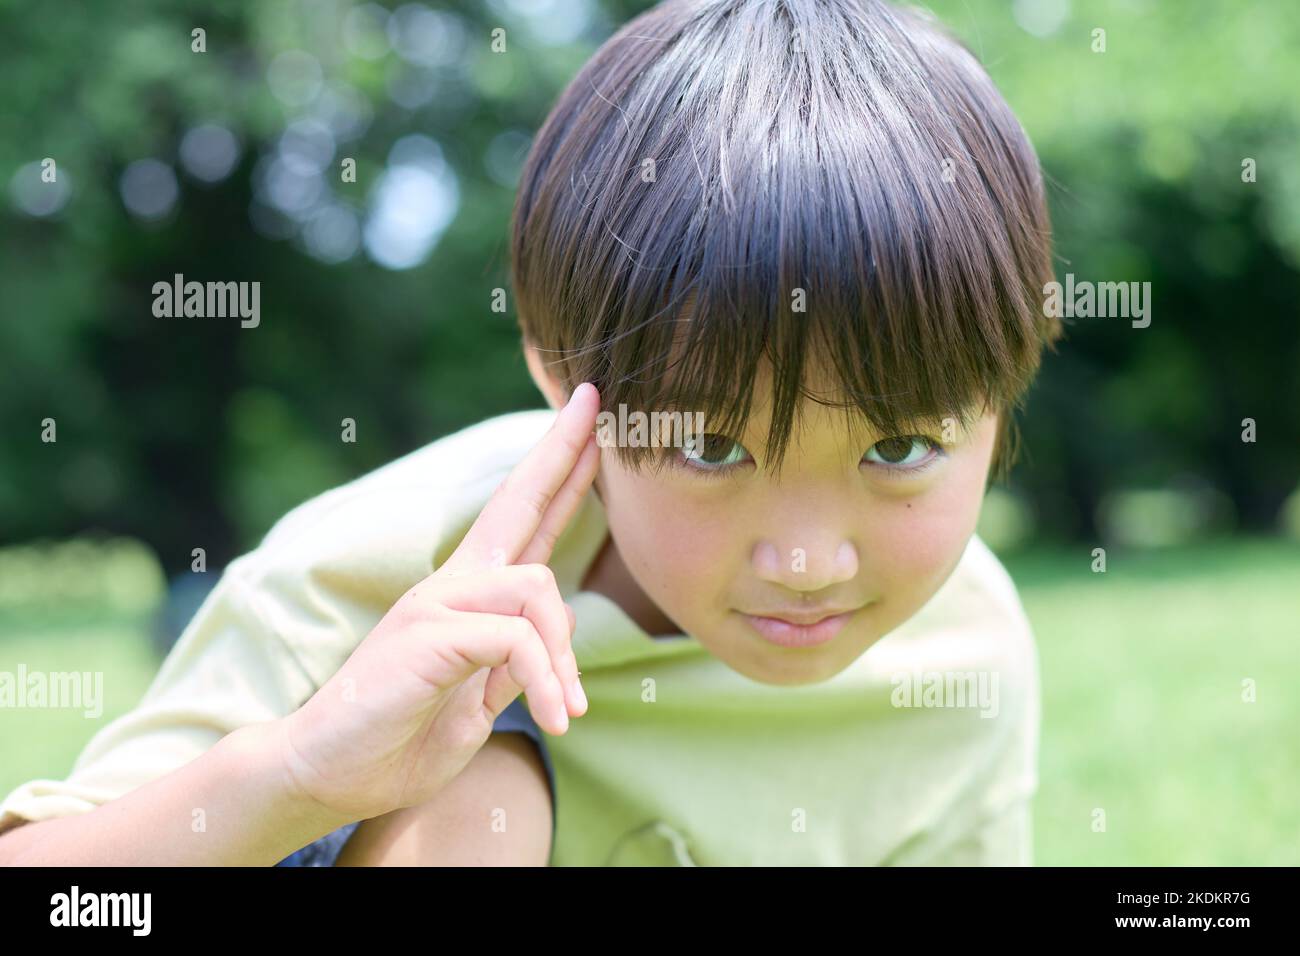 Japanese kid at city park Stock Photo